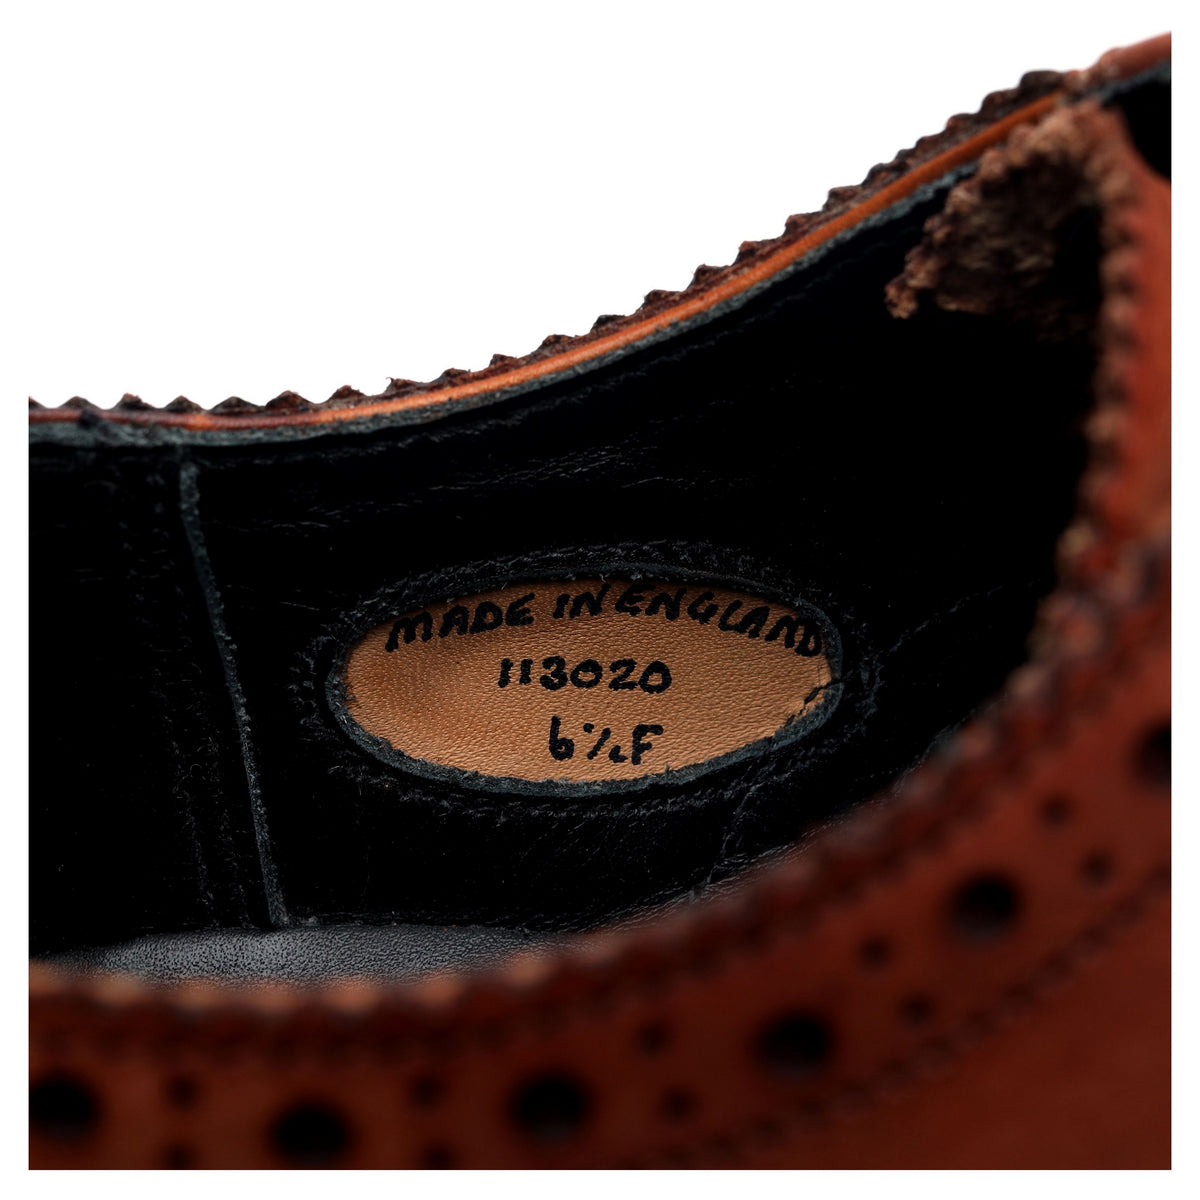 &#39;Harrow&#39; Triple Welt Tan Brown Leather Oxford Brogues UK 6.5 F